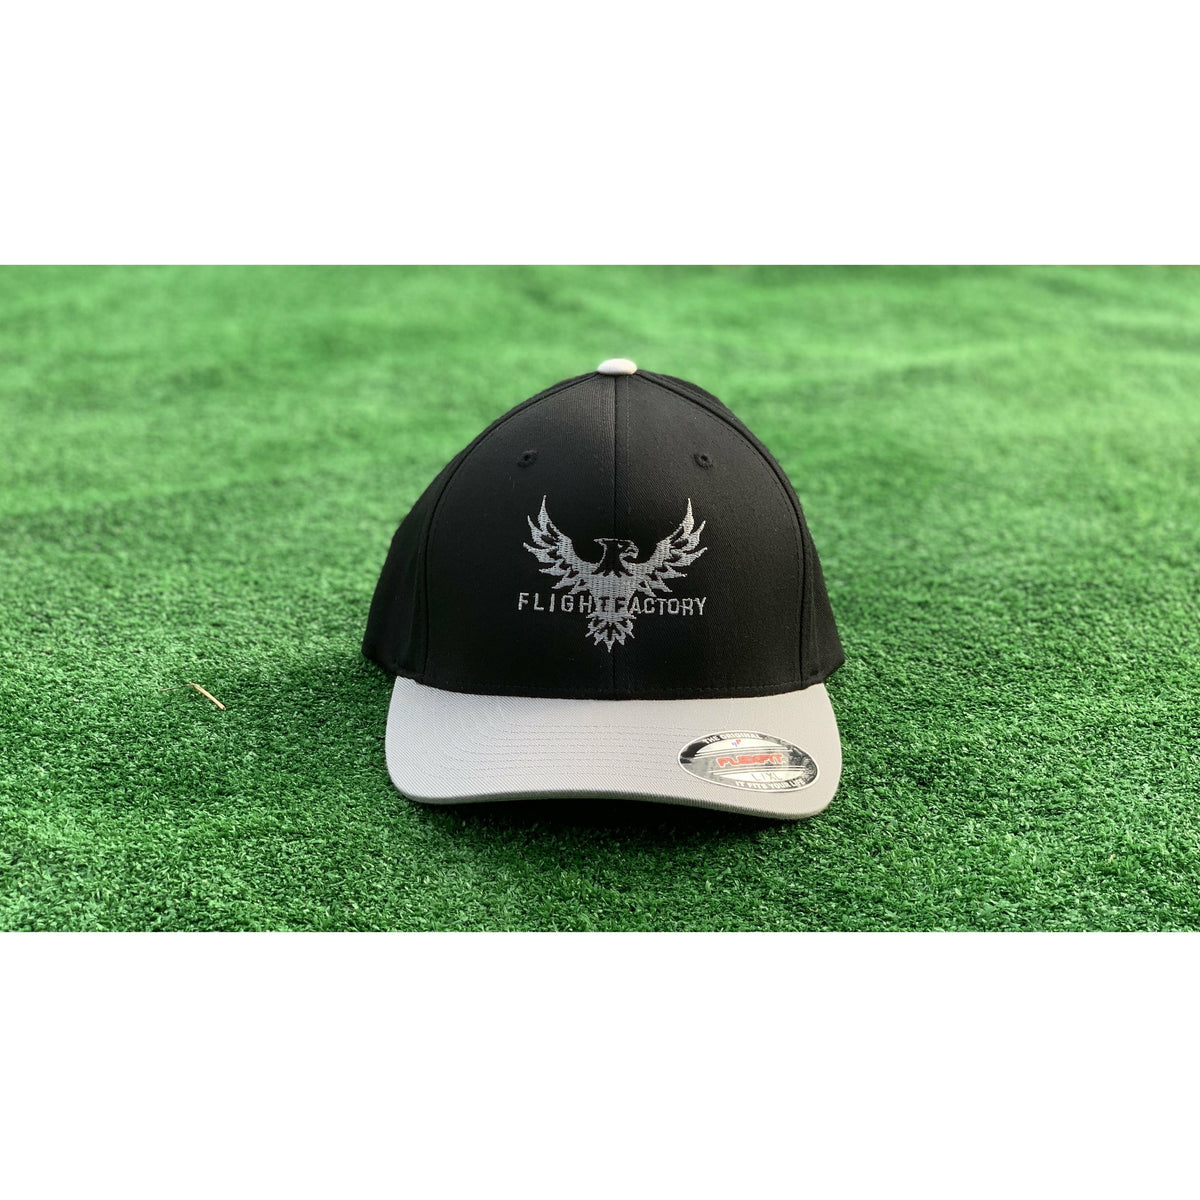 Flight Factory Black and Silver Flexfit Hats